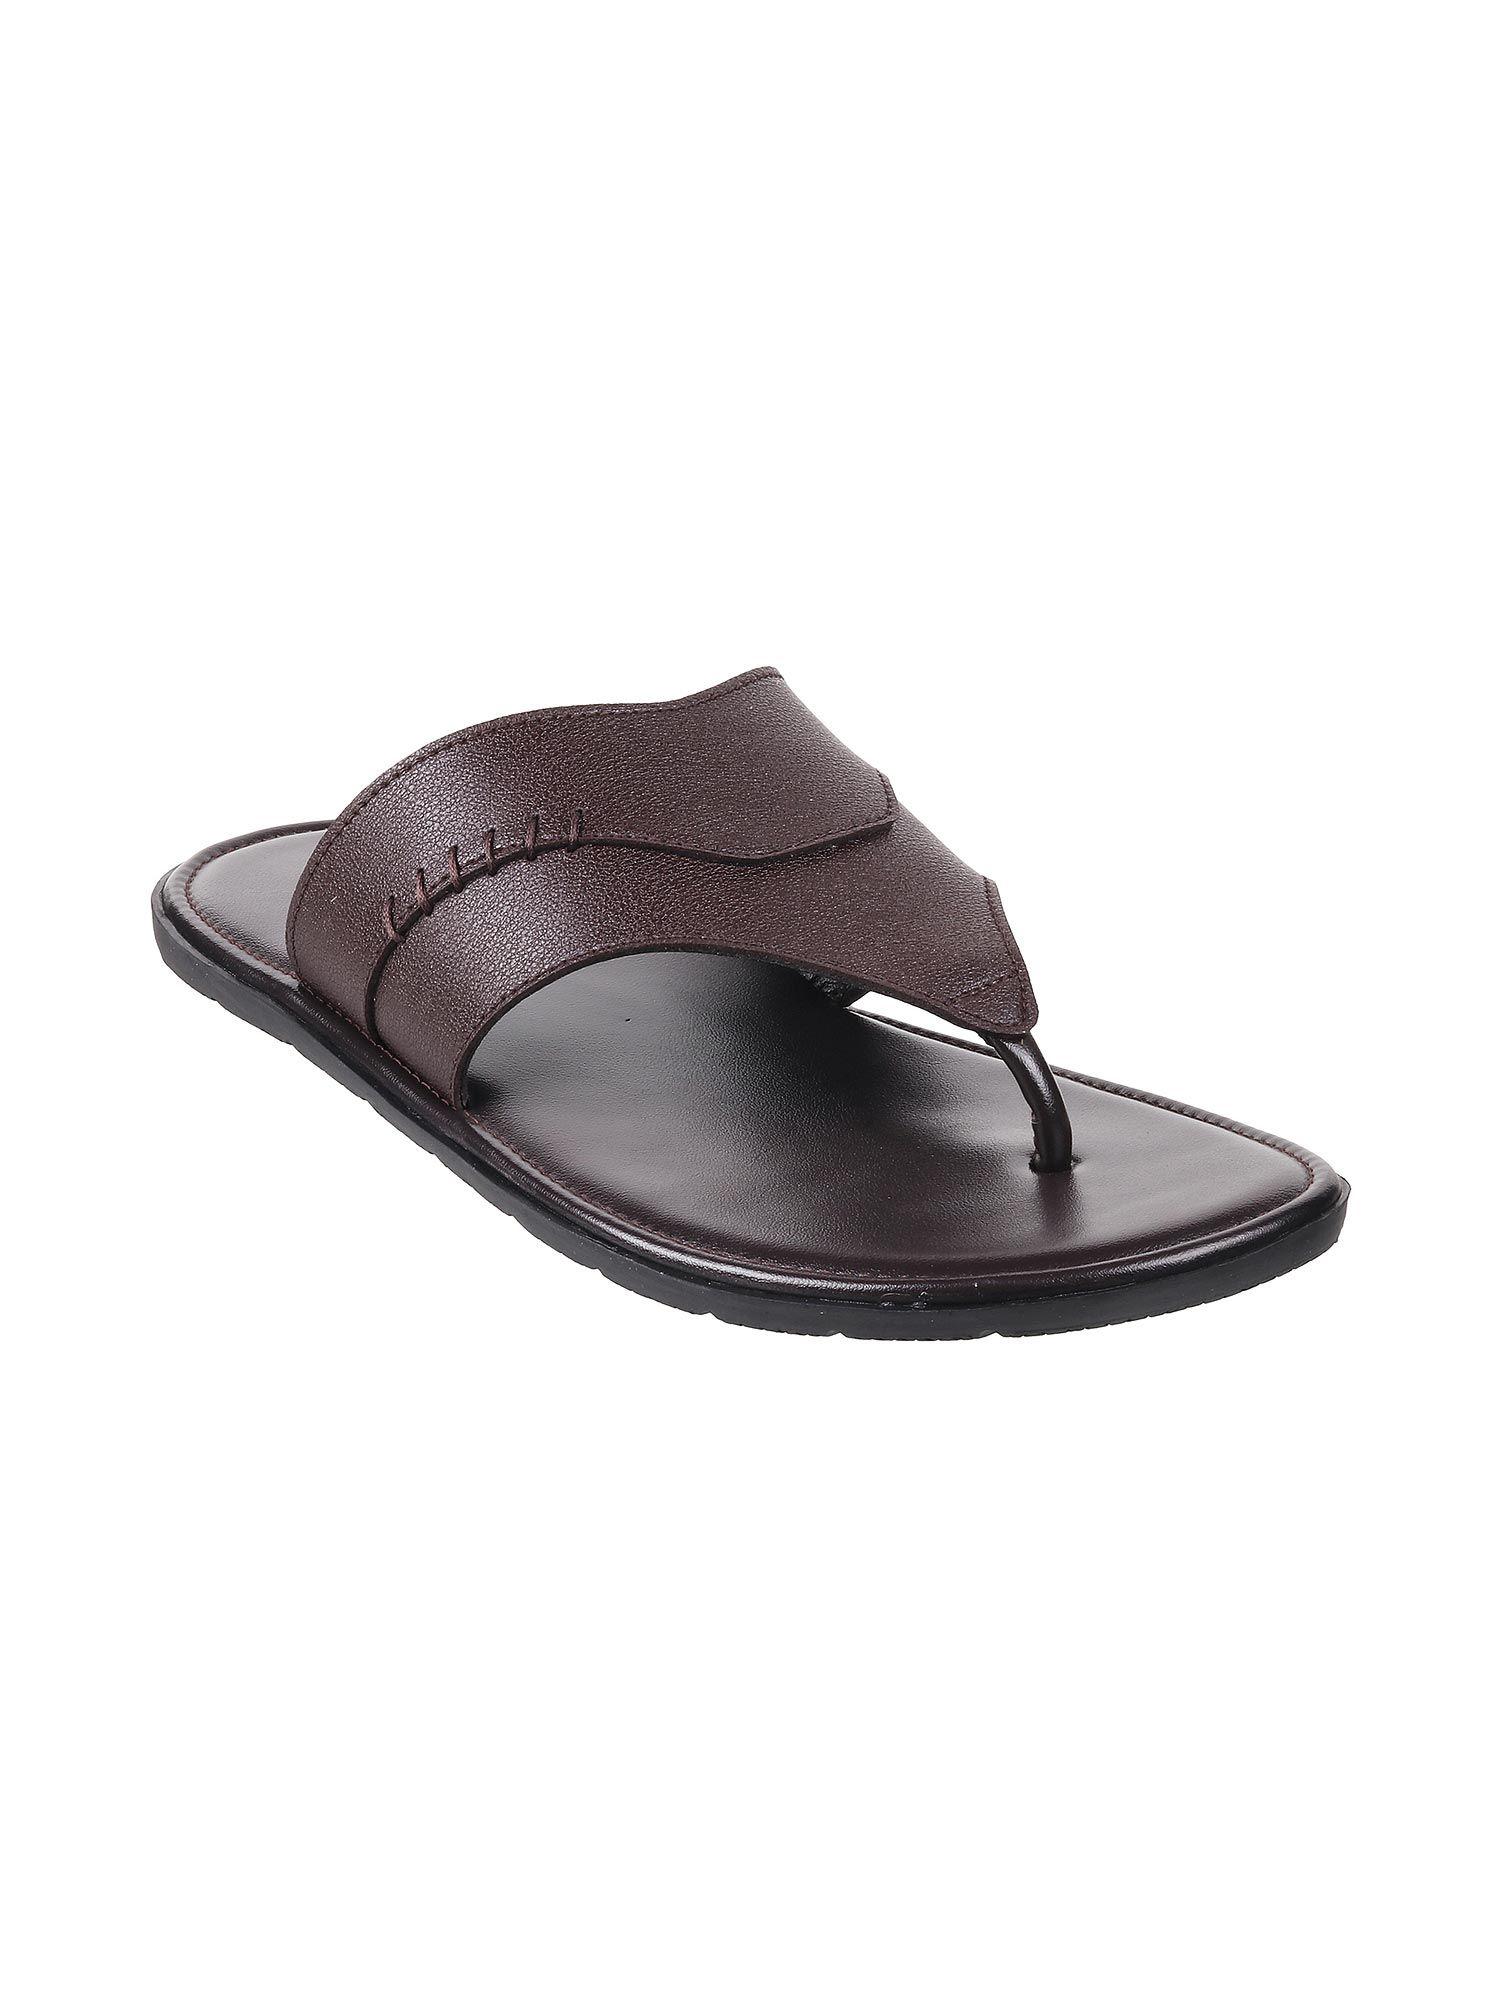 mens-brown-flat-chappalsmochi-mens-brown-sandals